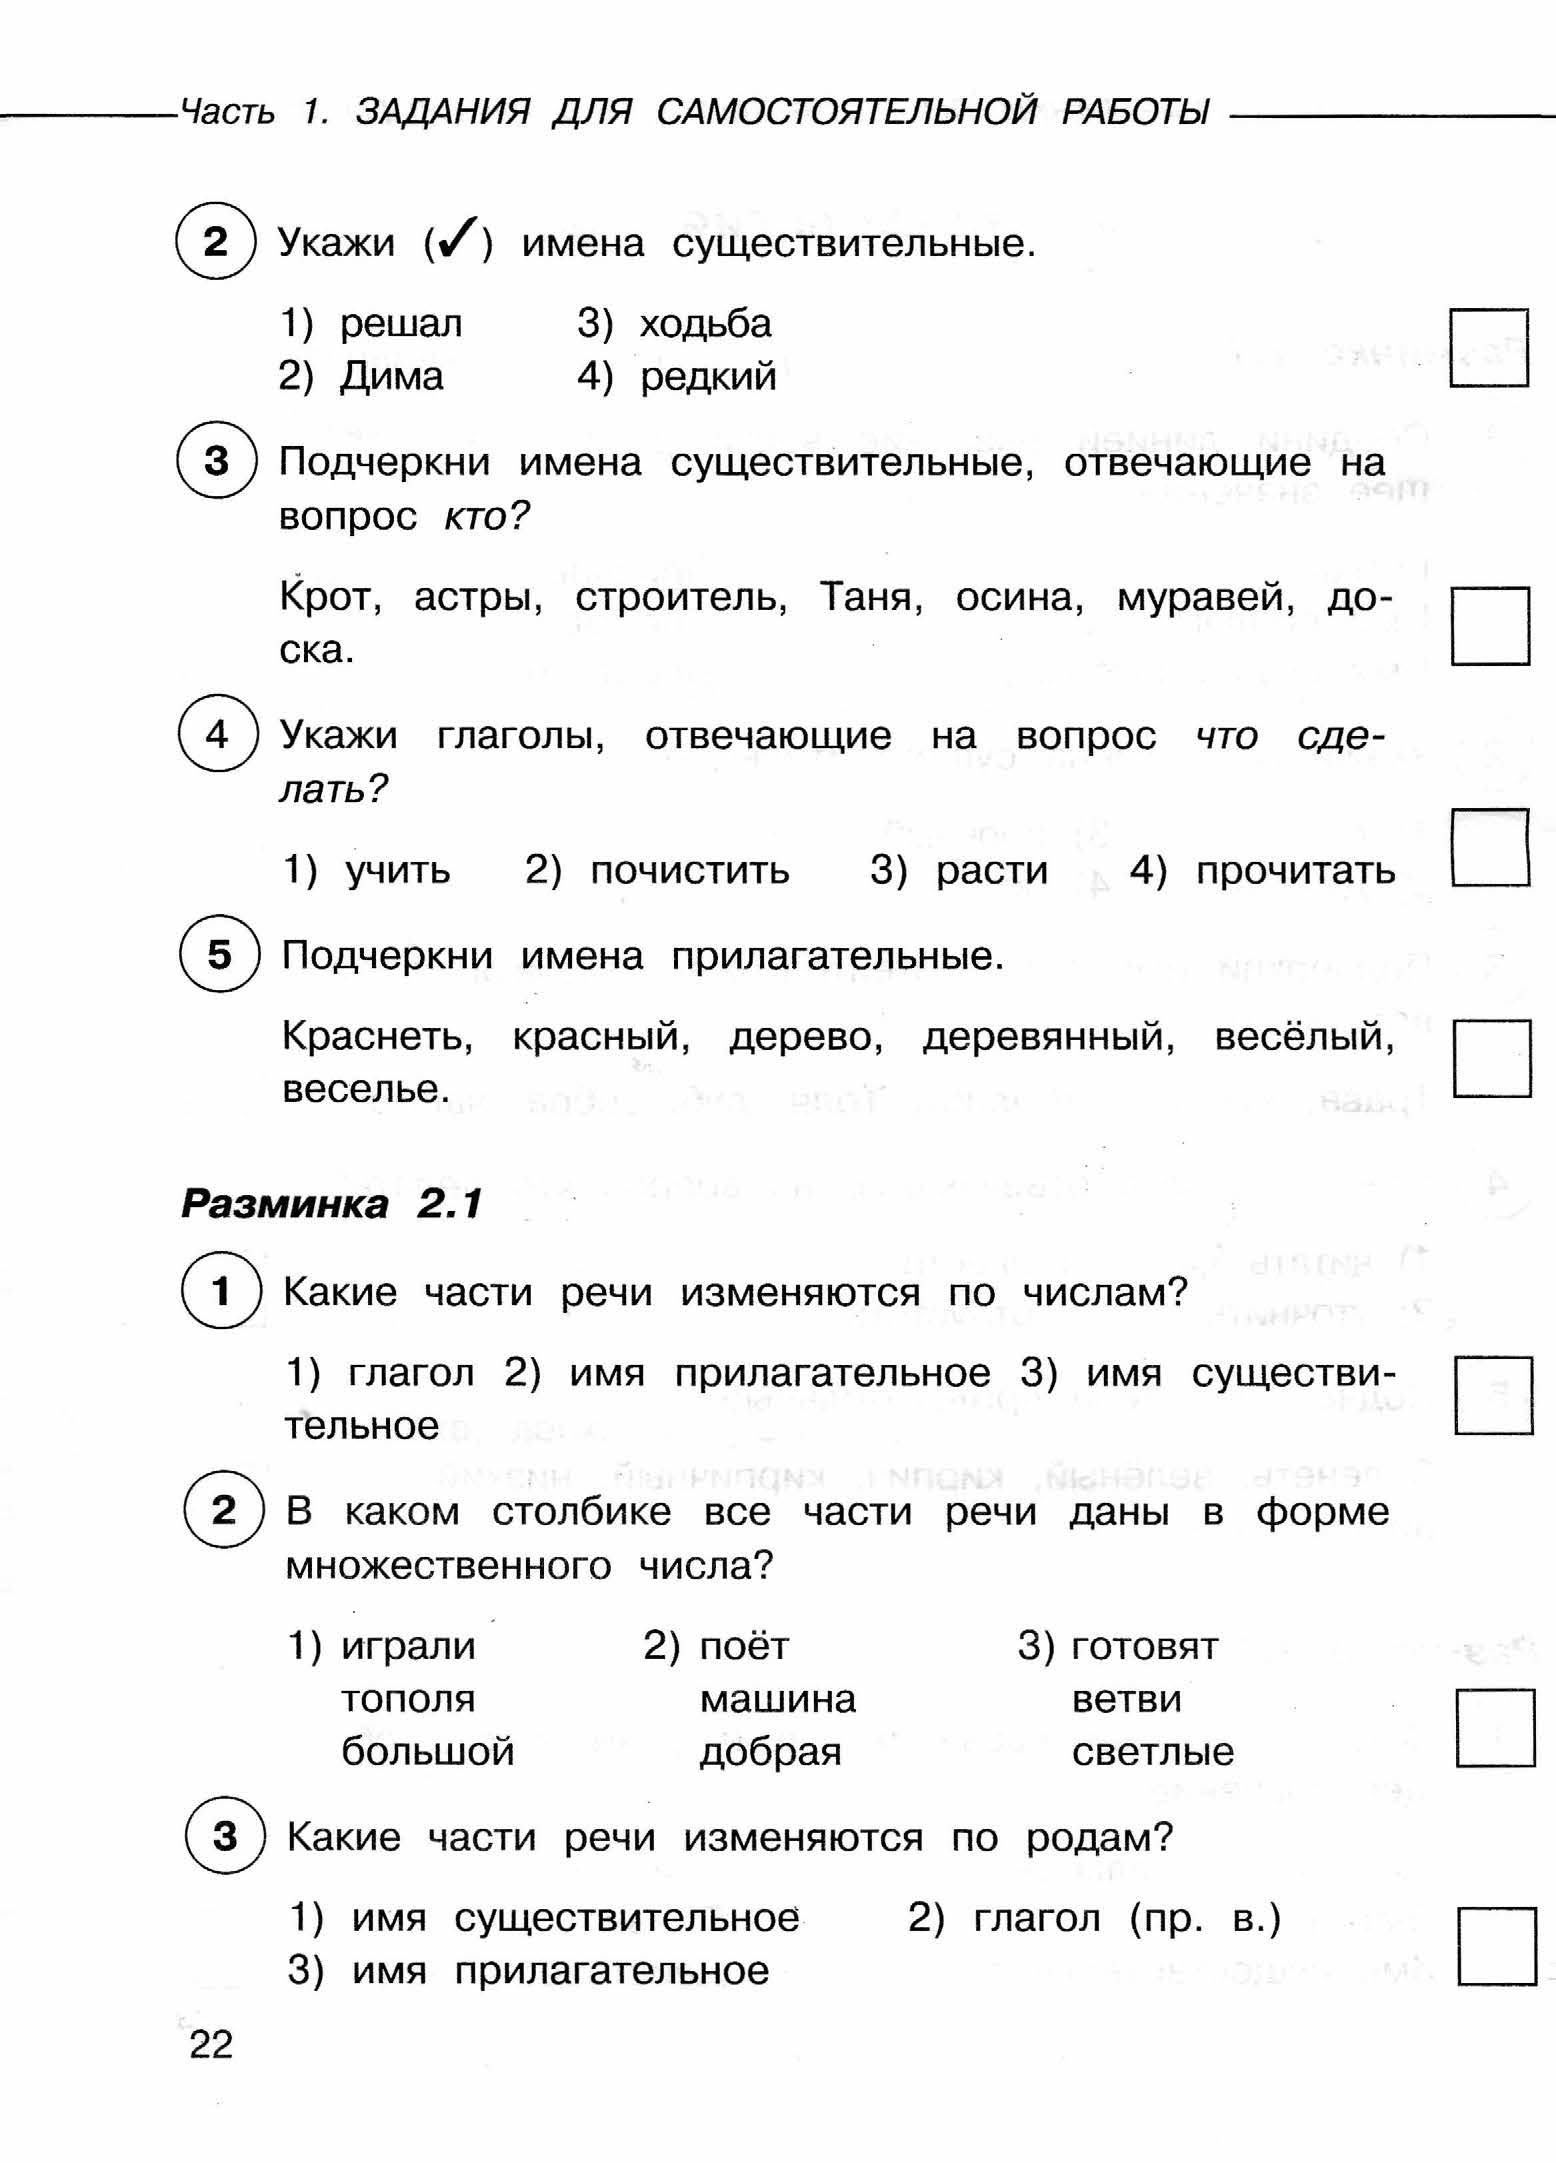 Решу тест впр 5 класс русский